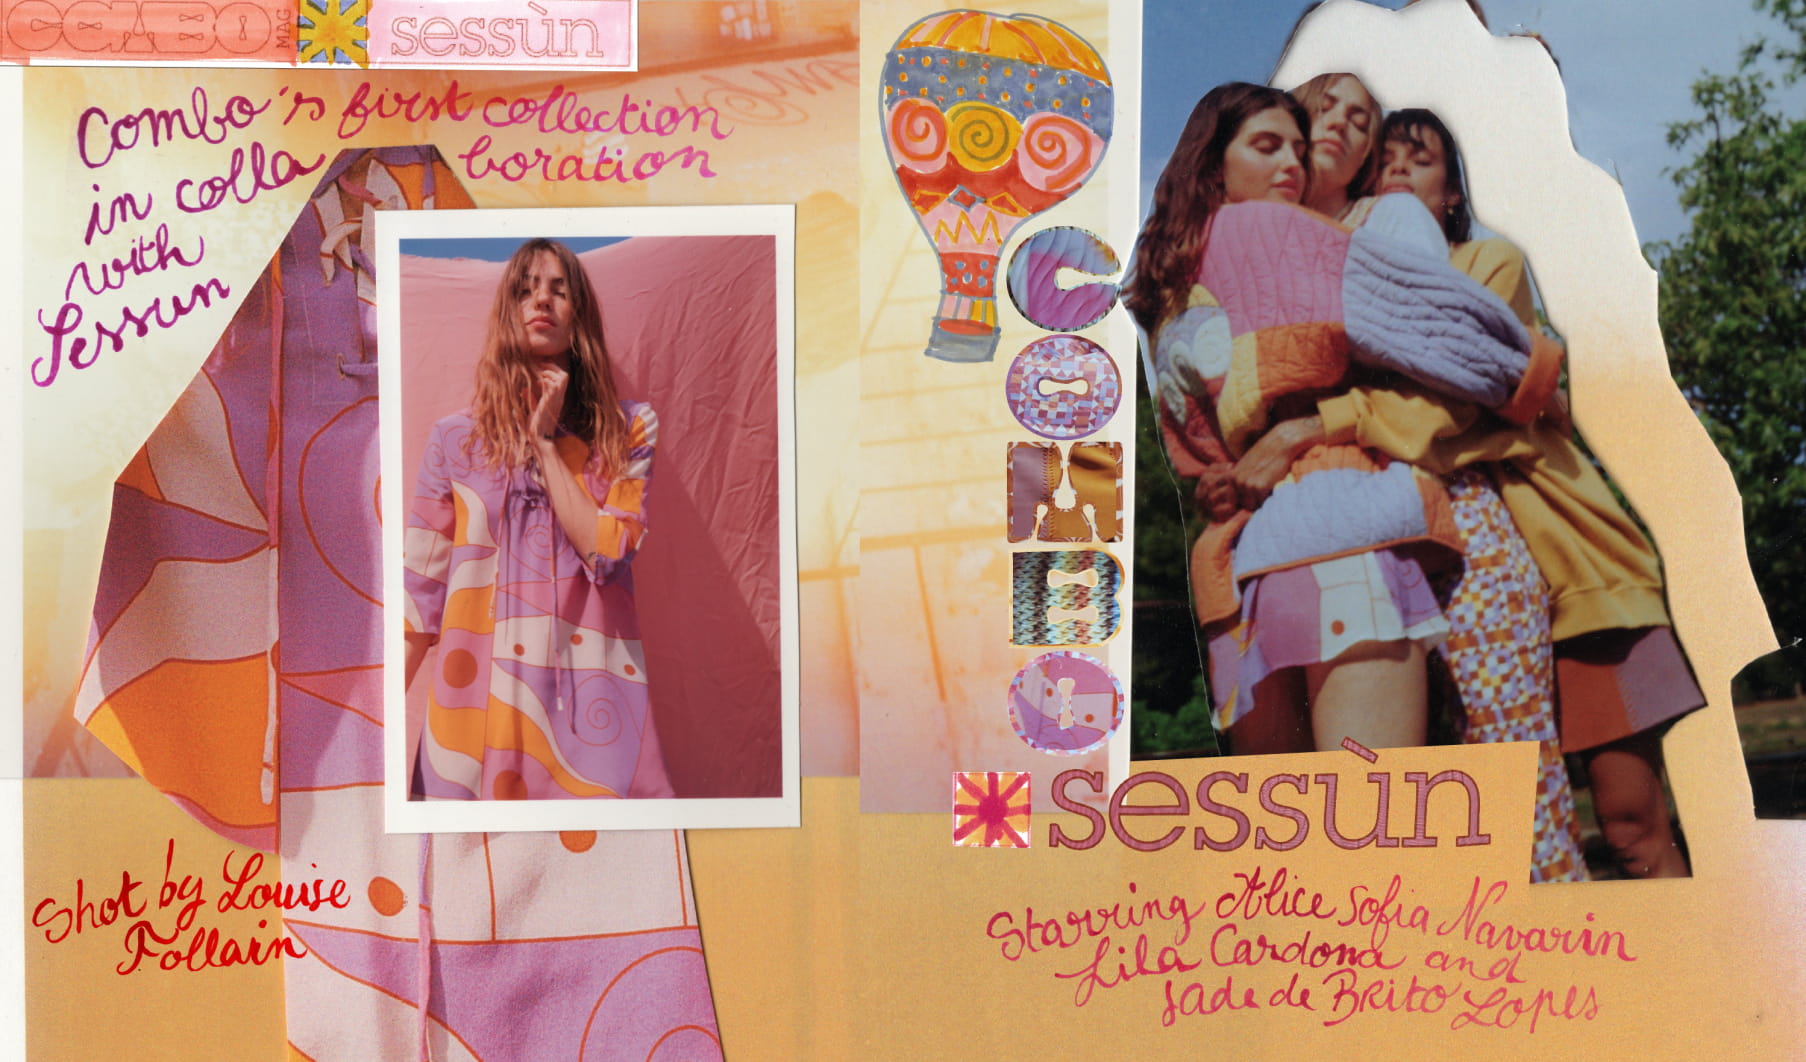 Sessun,Louise follain,combo magazine,collab,collaboration,collection capsule,mode,fashion crush